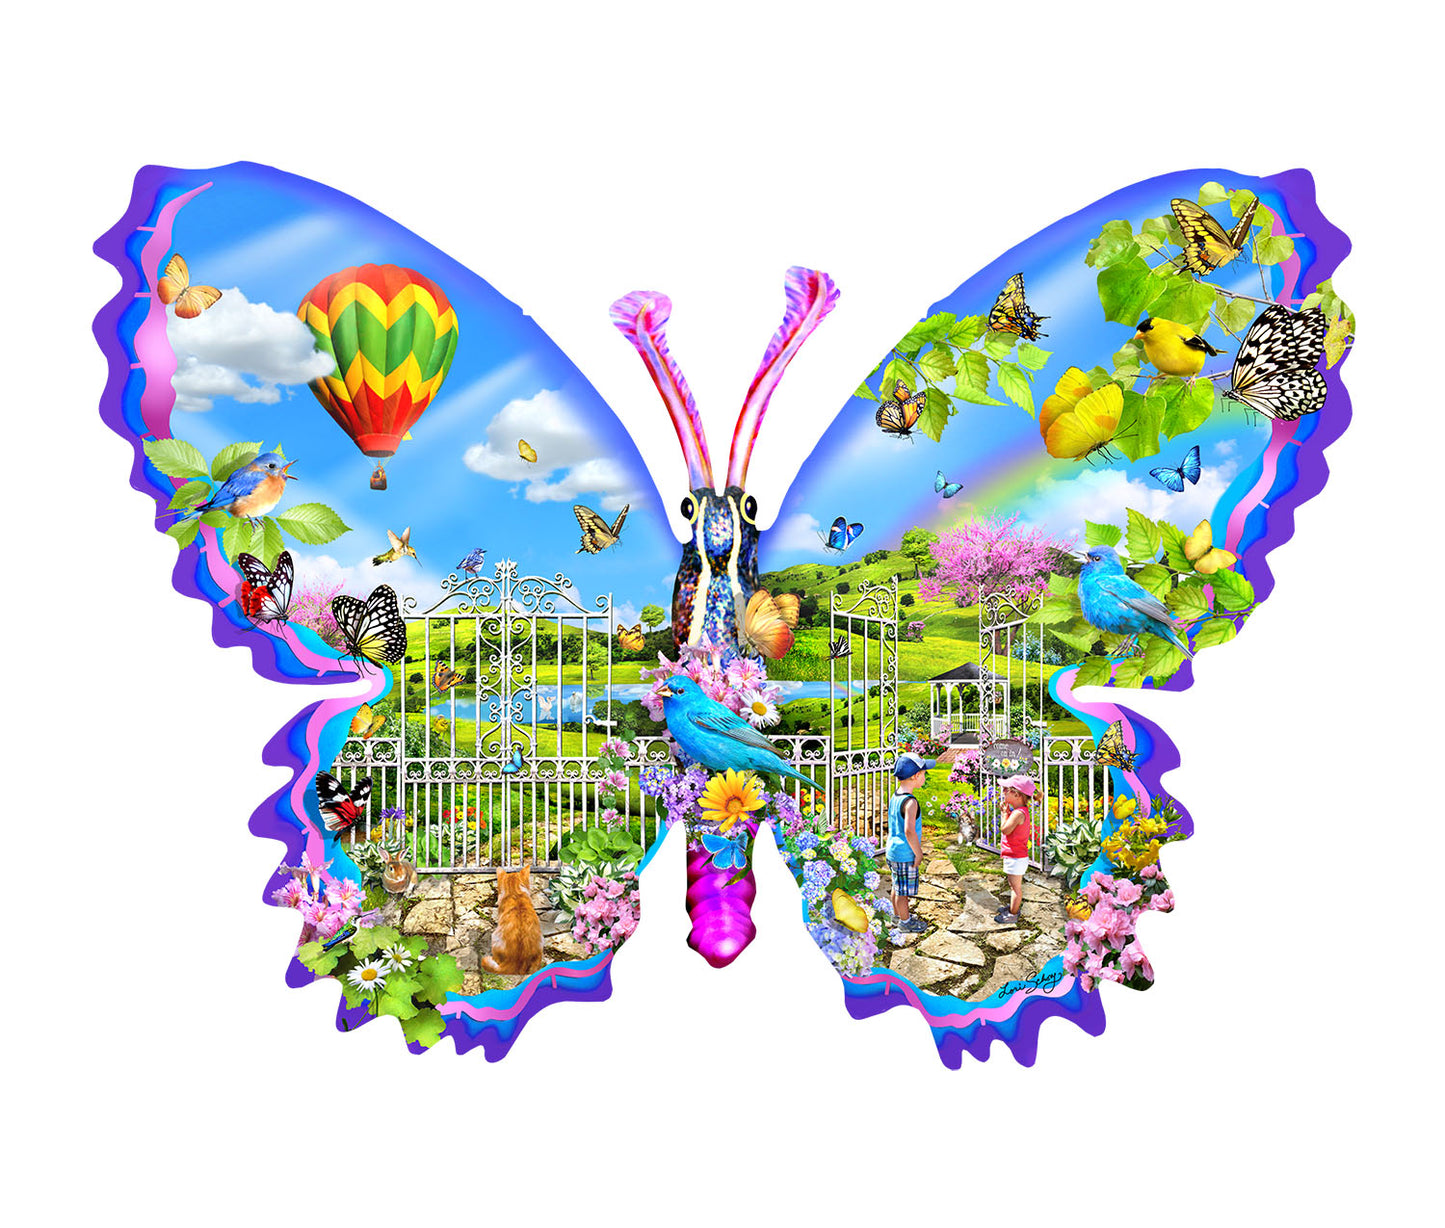 Garden Butterfly - Shaped 1000 Piece Jigsaw Puzzle